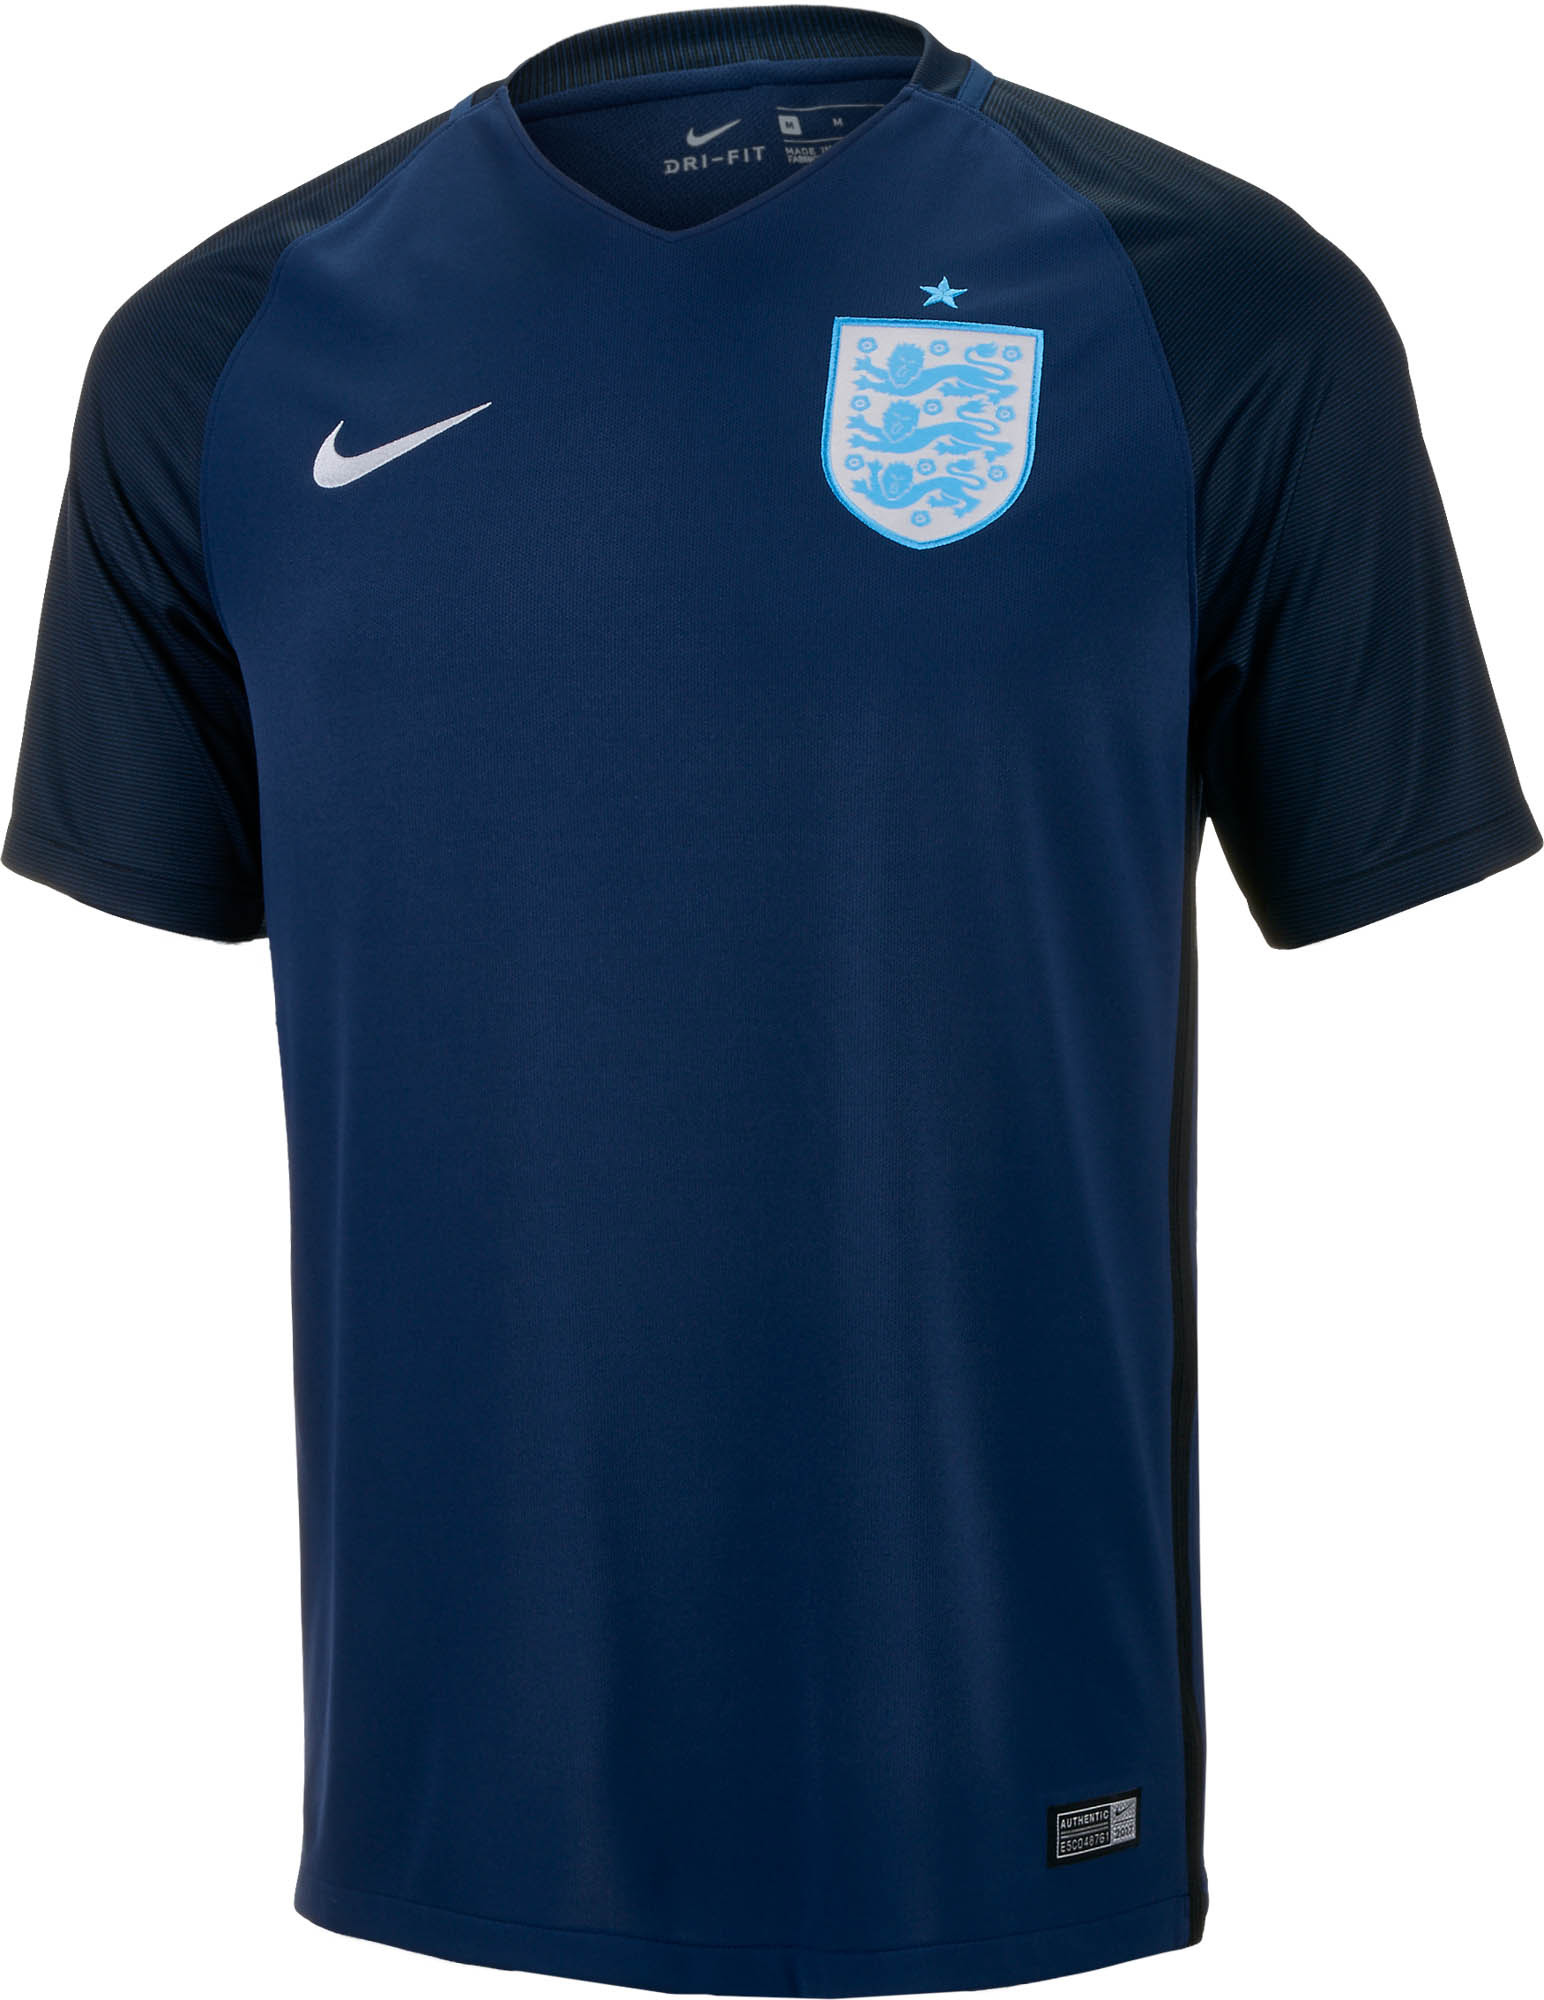 england soccer jersey